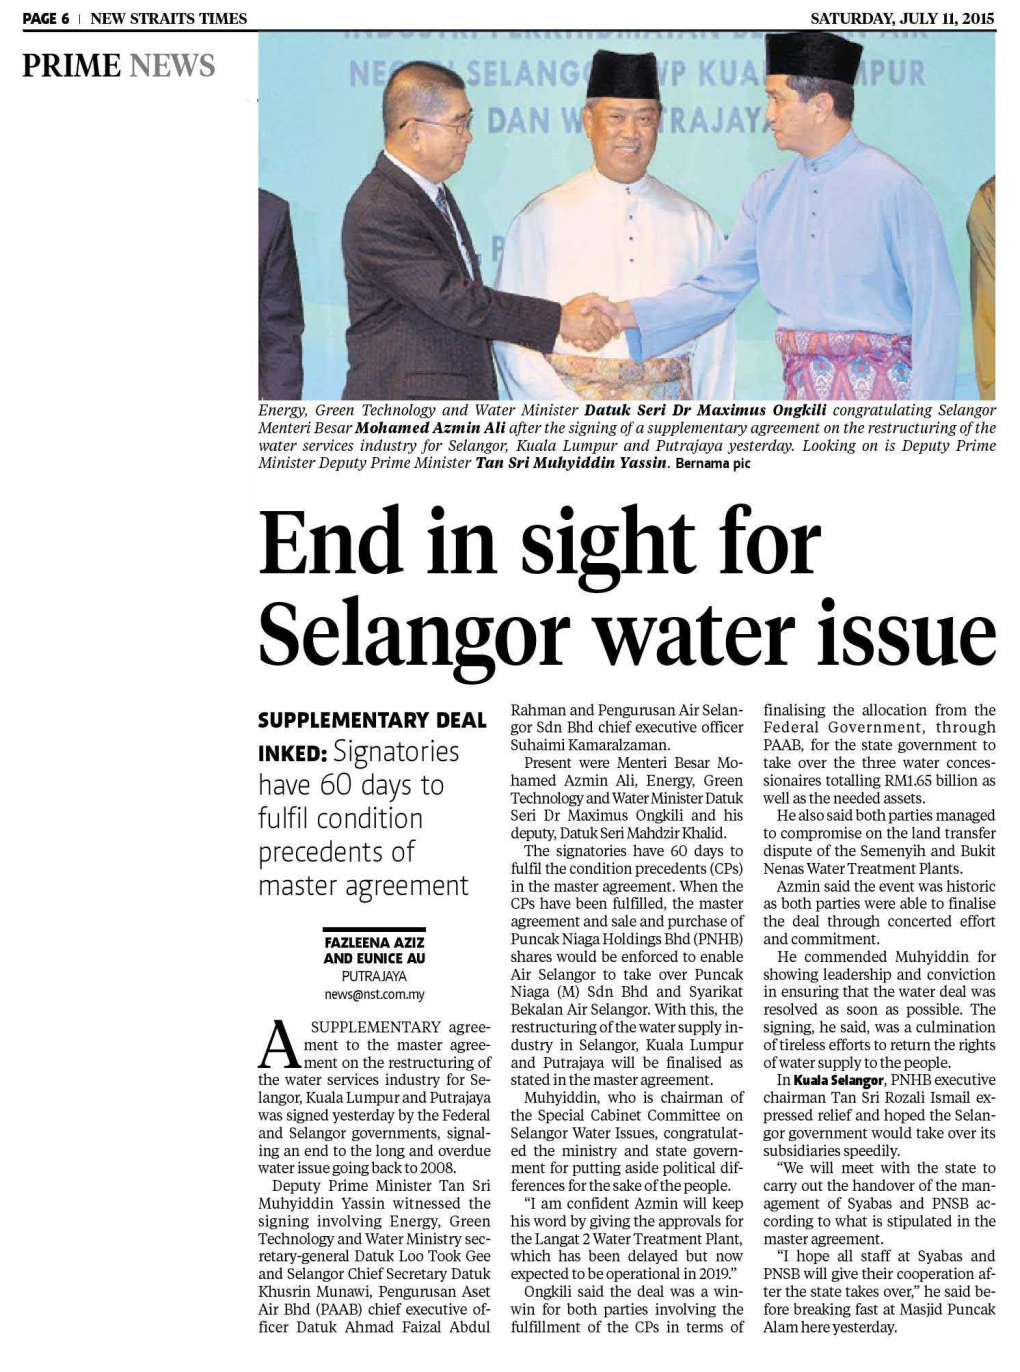 New Straits Times Prime News